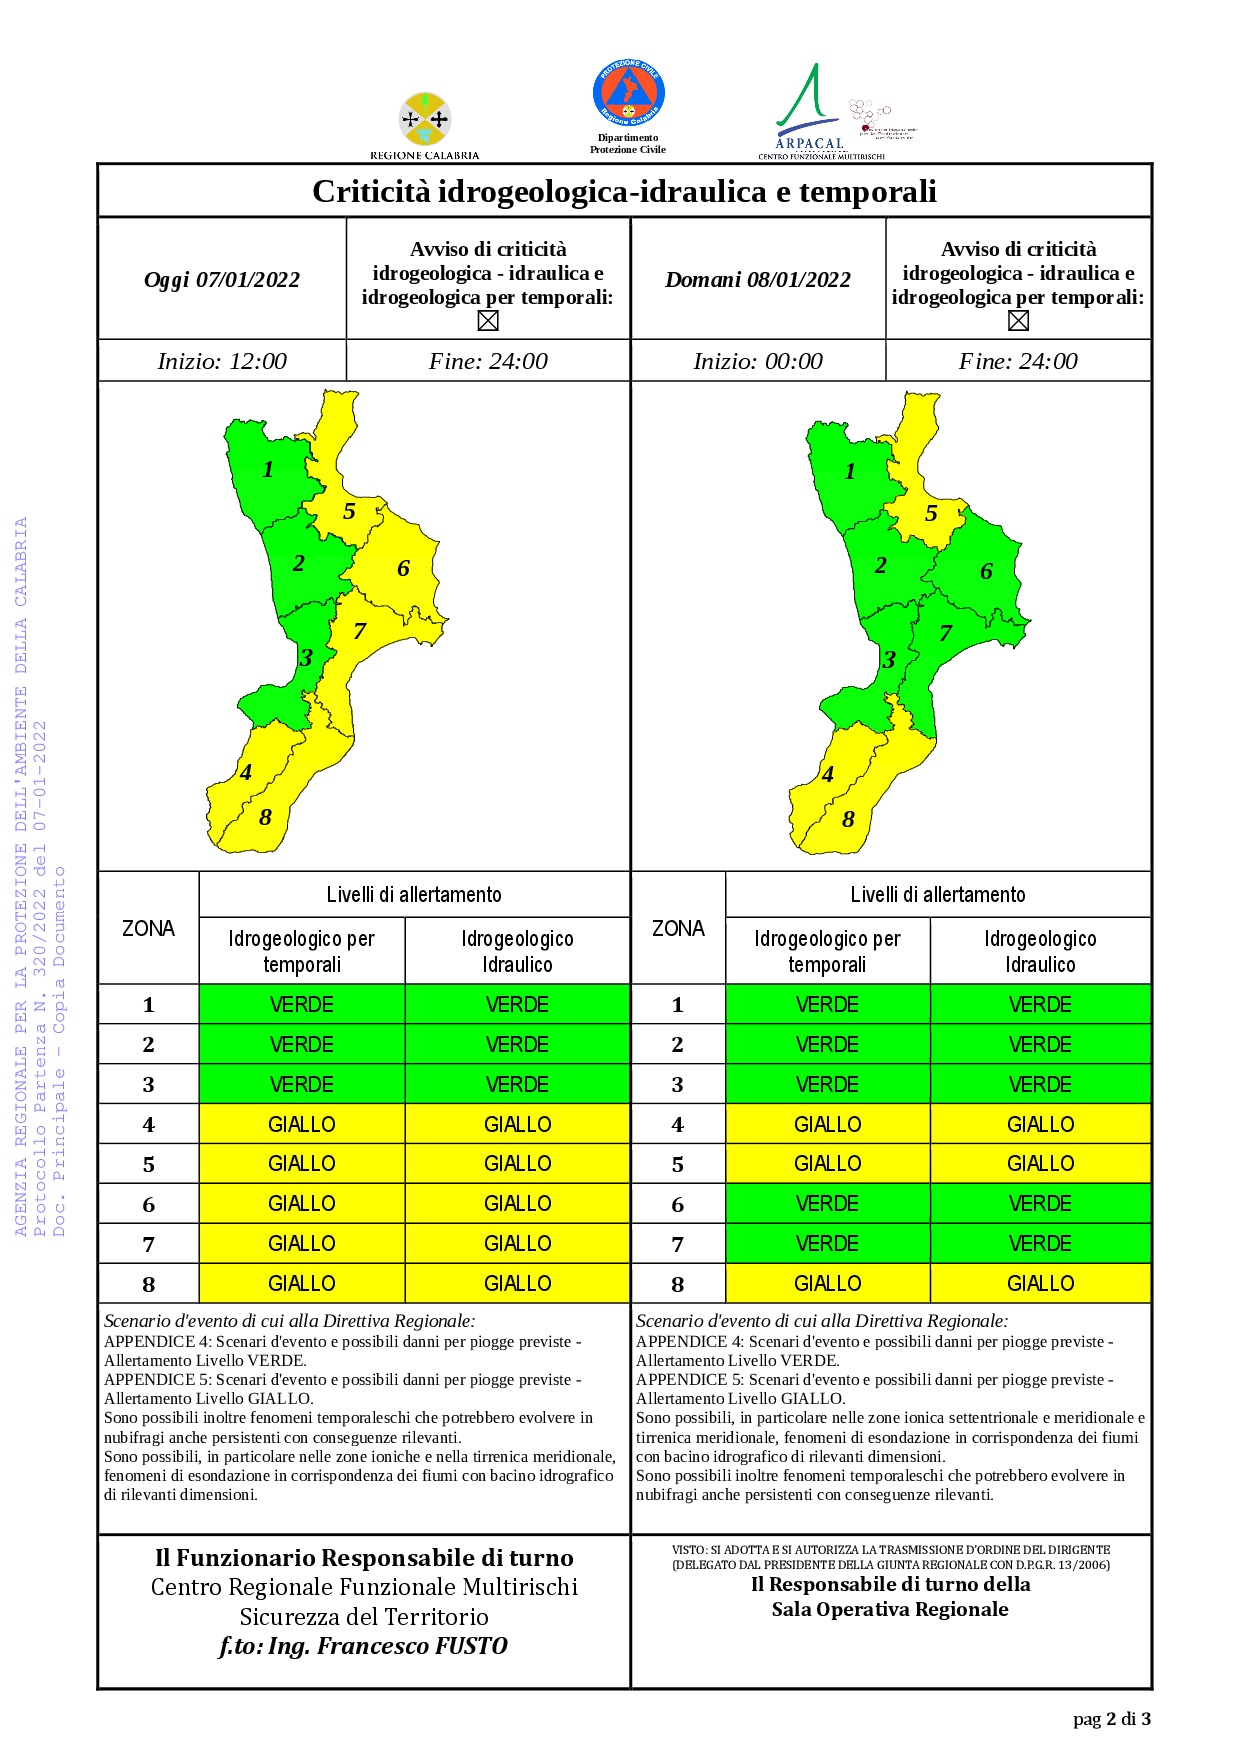 Criticità idrogeologica-idraulica e temporali in Calabria 07-01-2022